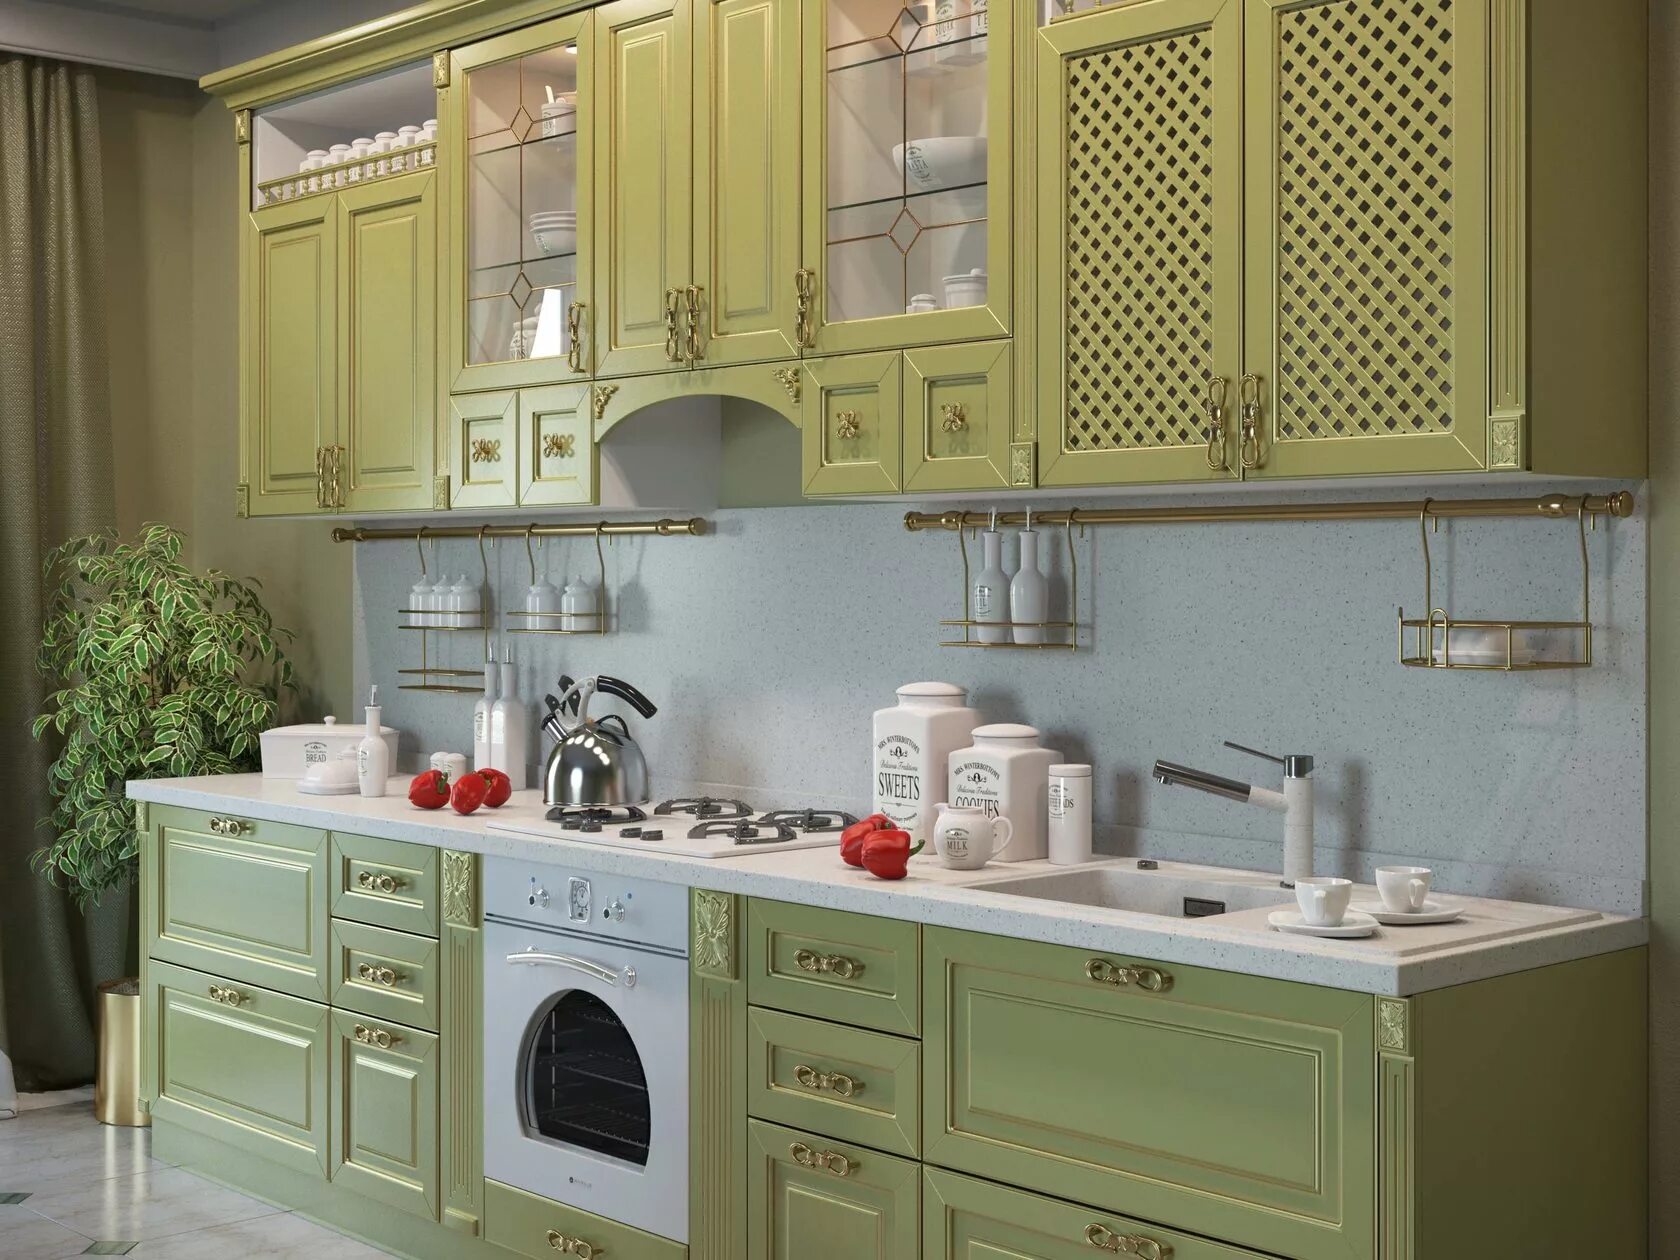 Фасады кухонной мебели. Кухня олива патина. Кухонный гарнитур фисташкового цвета. Кухня классика.